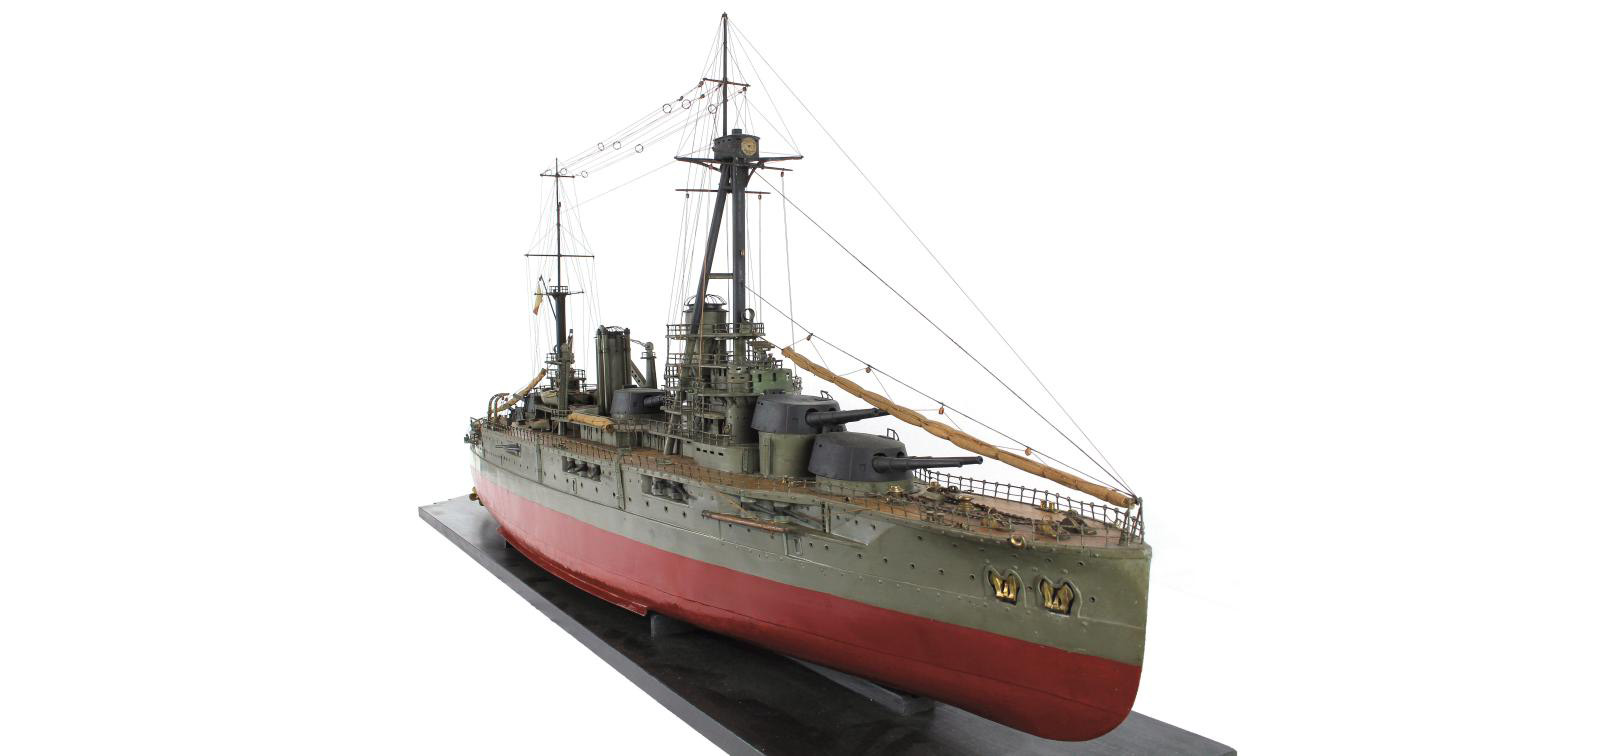 The Battleship Lorraine, Queen of the Ponds